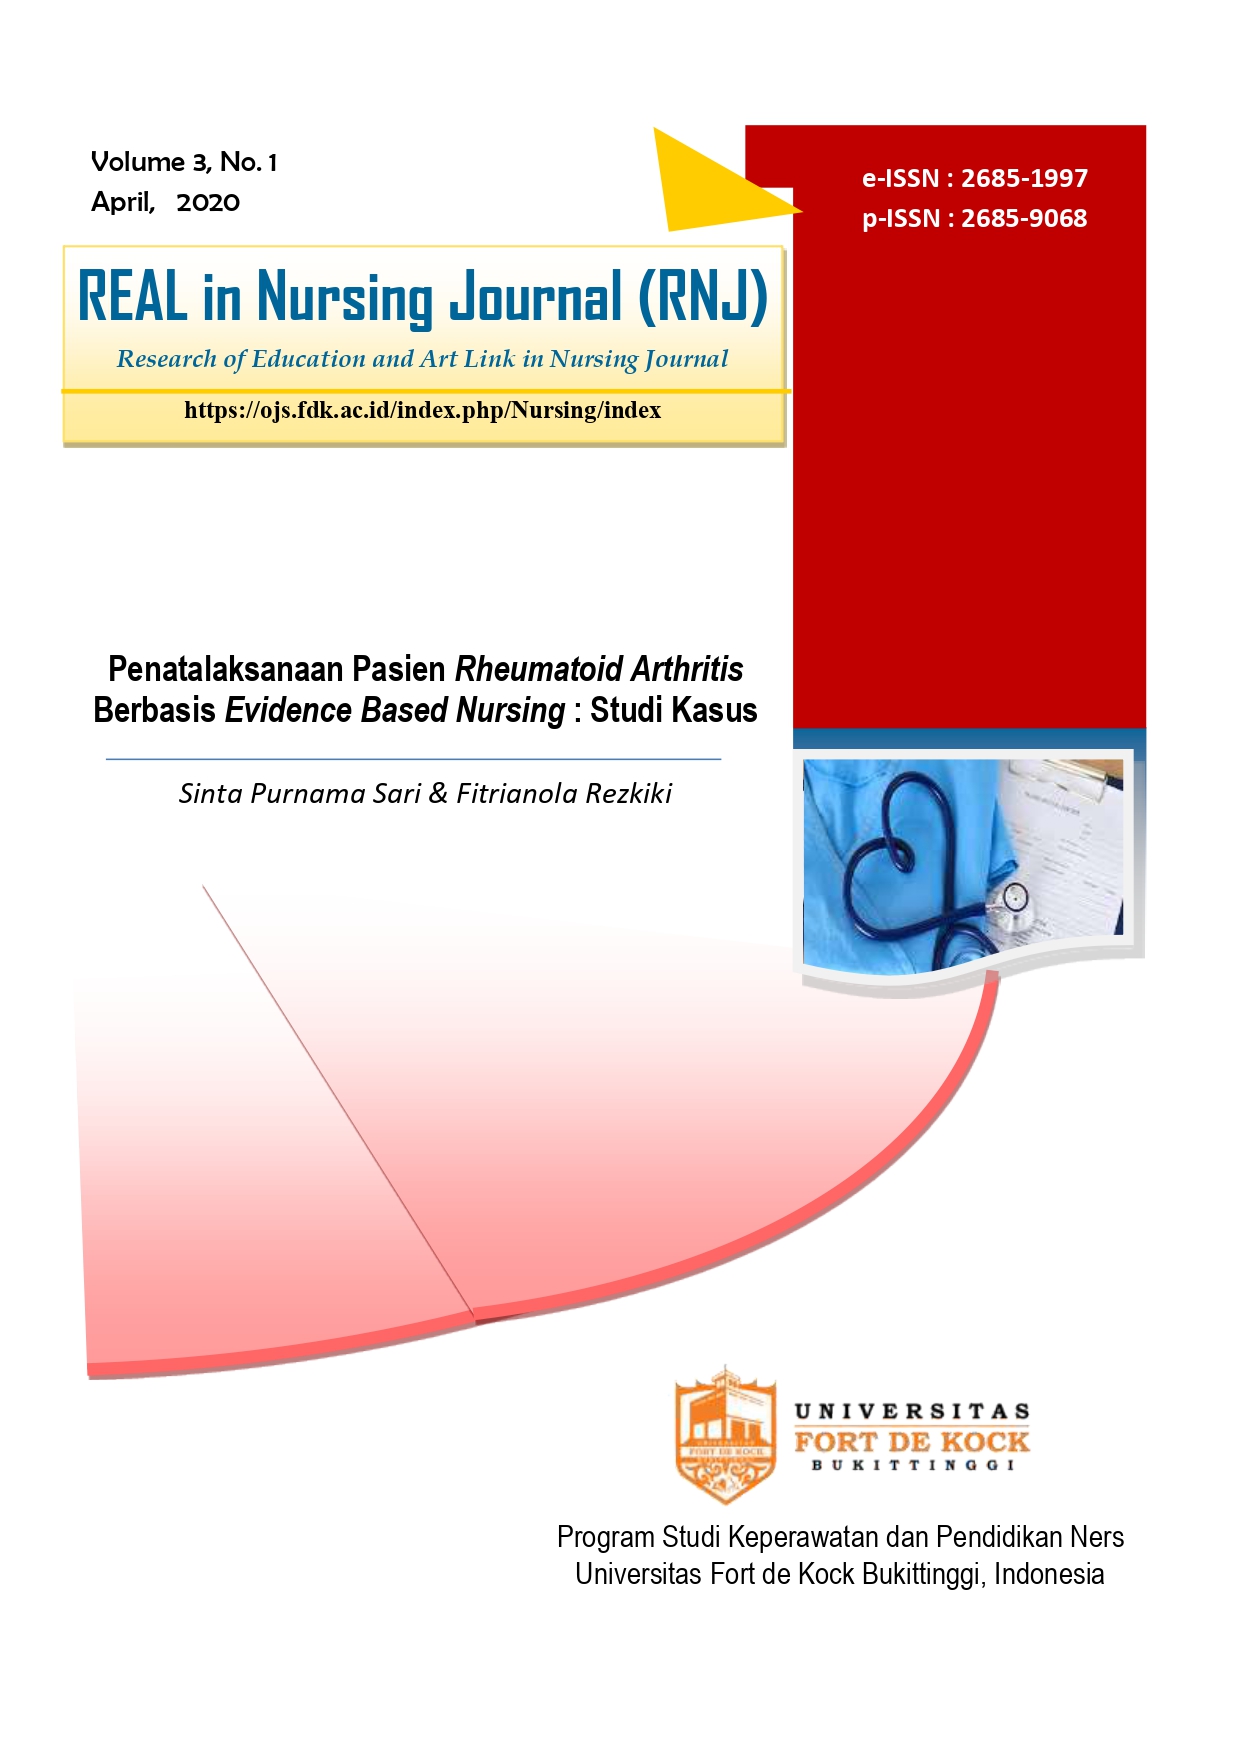 Penatalaksanaan Pasien Rheumatoid Arthritis Berbasis Evidence Based Nursing: Studi Kasus